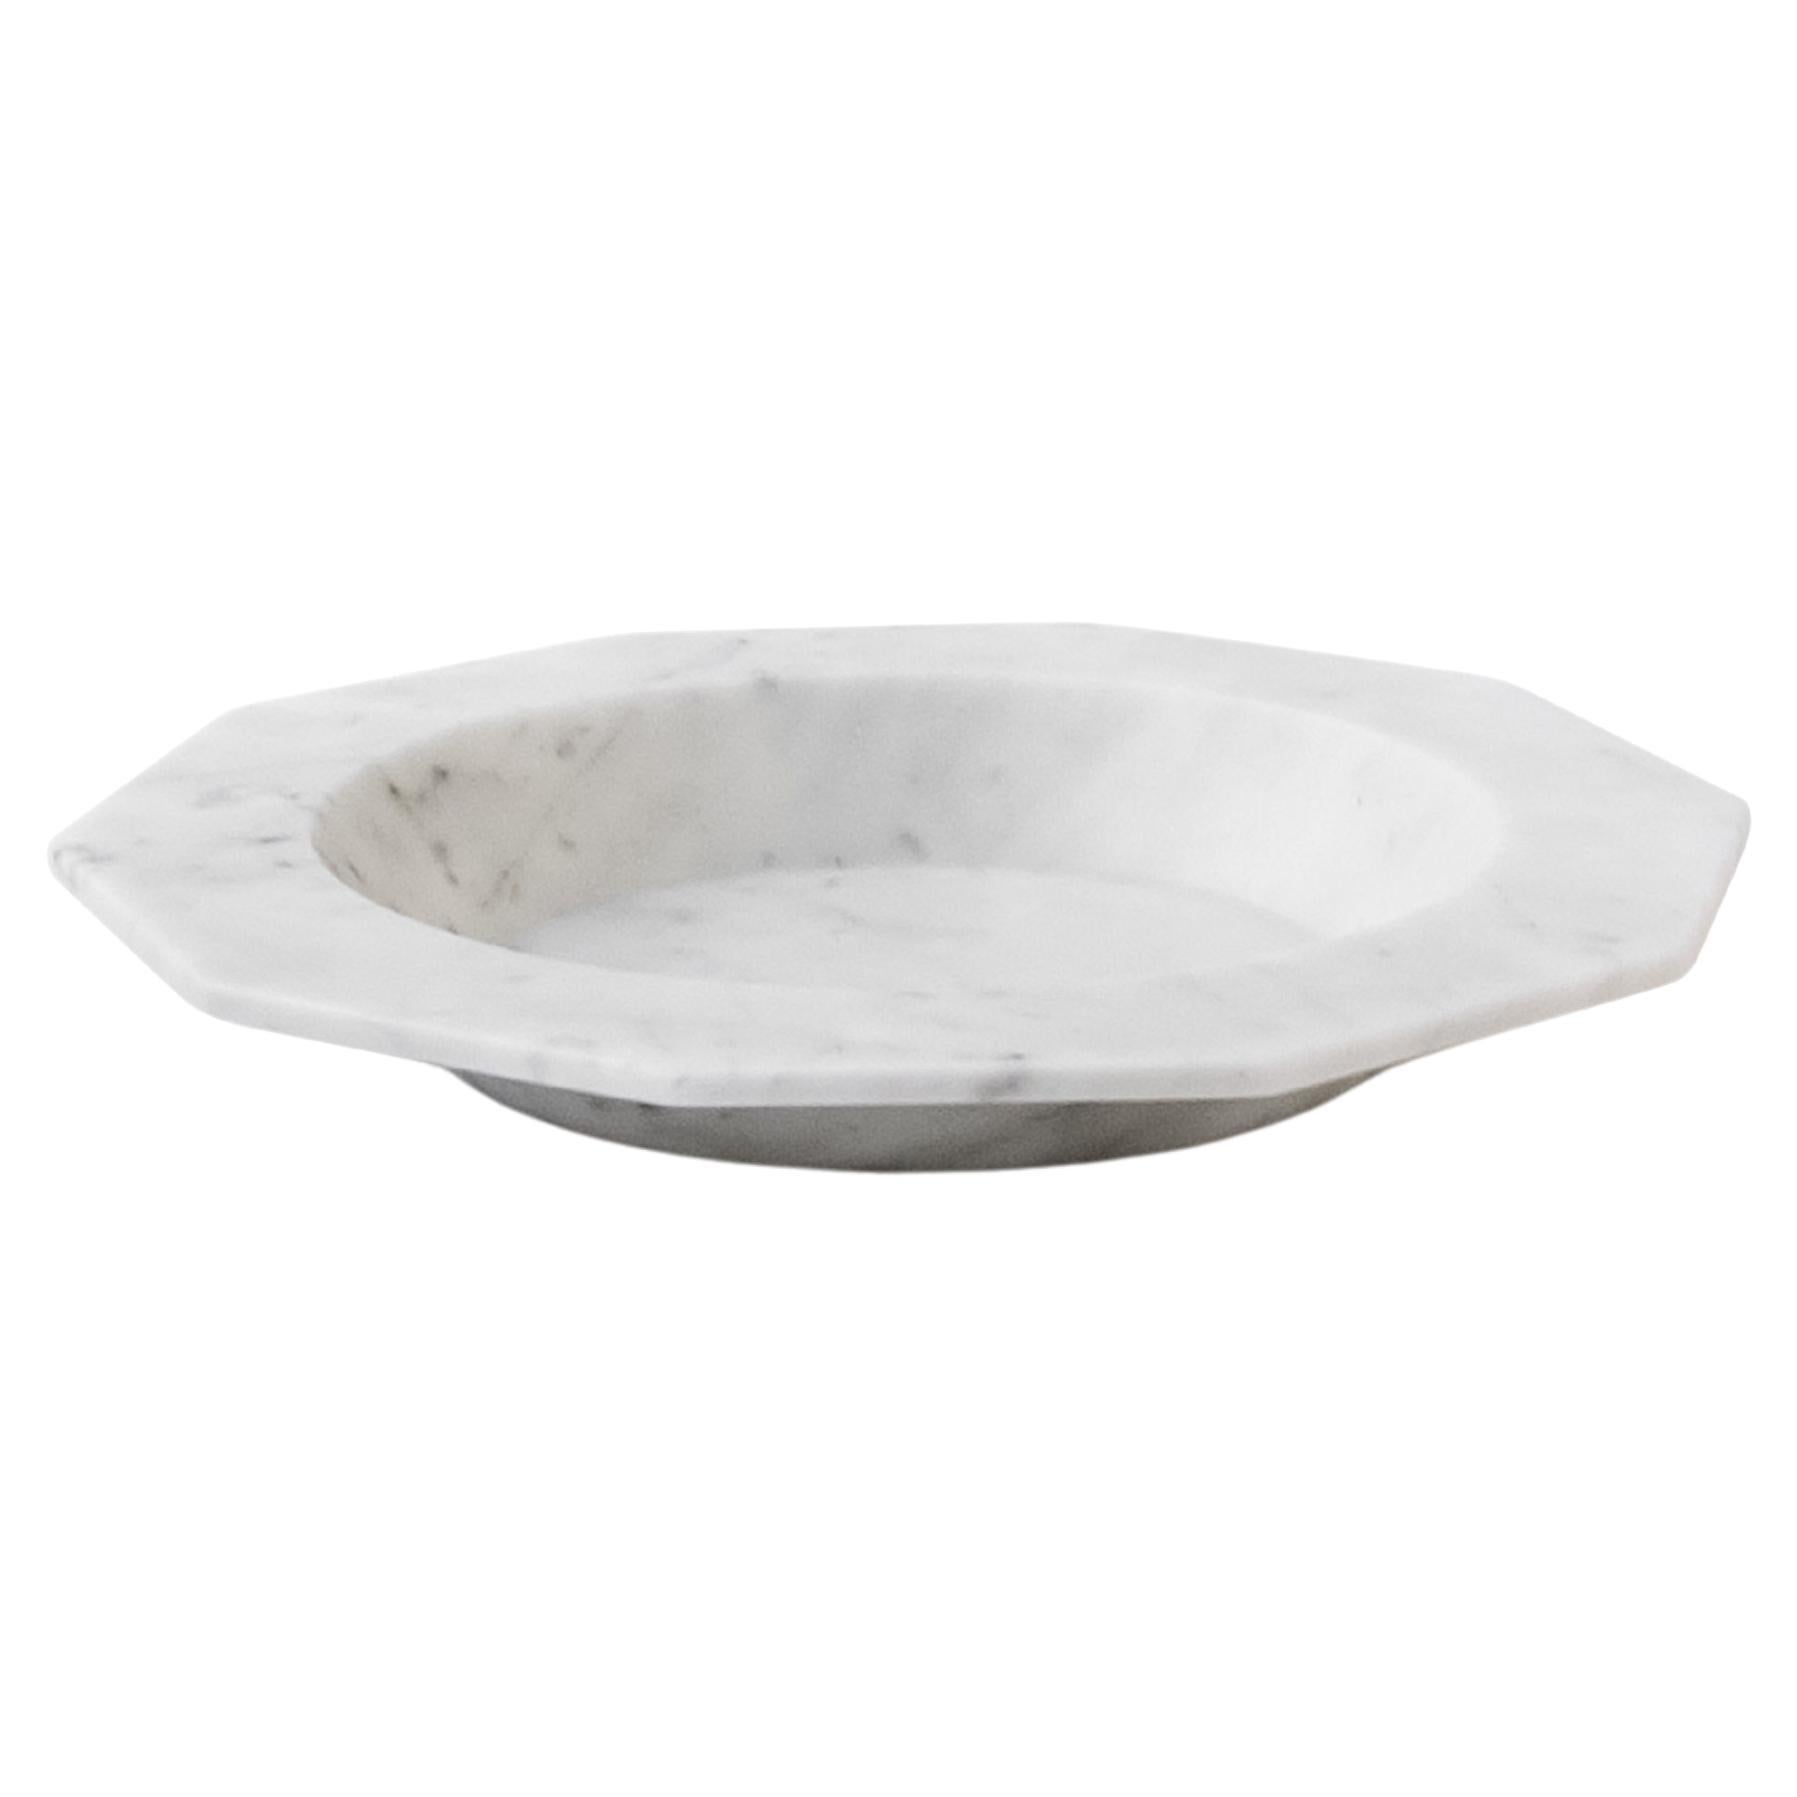 Handmade Soup Plate in Satin White Carrara Marble